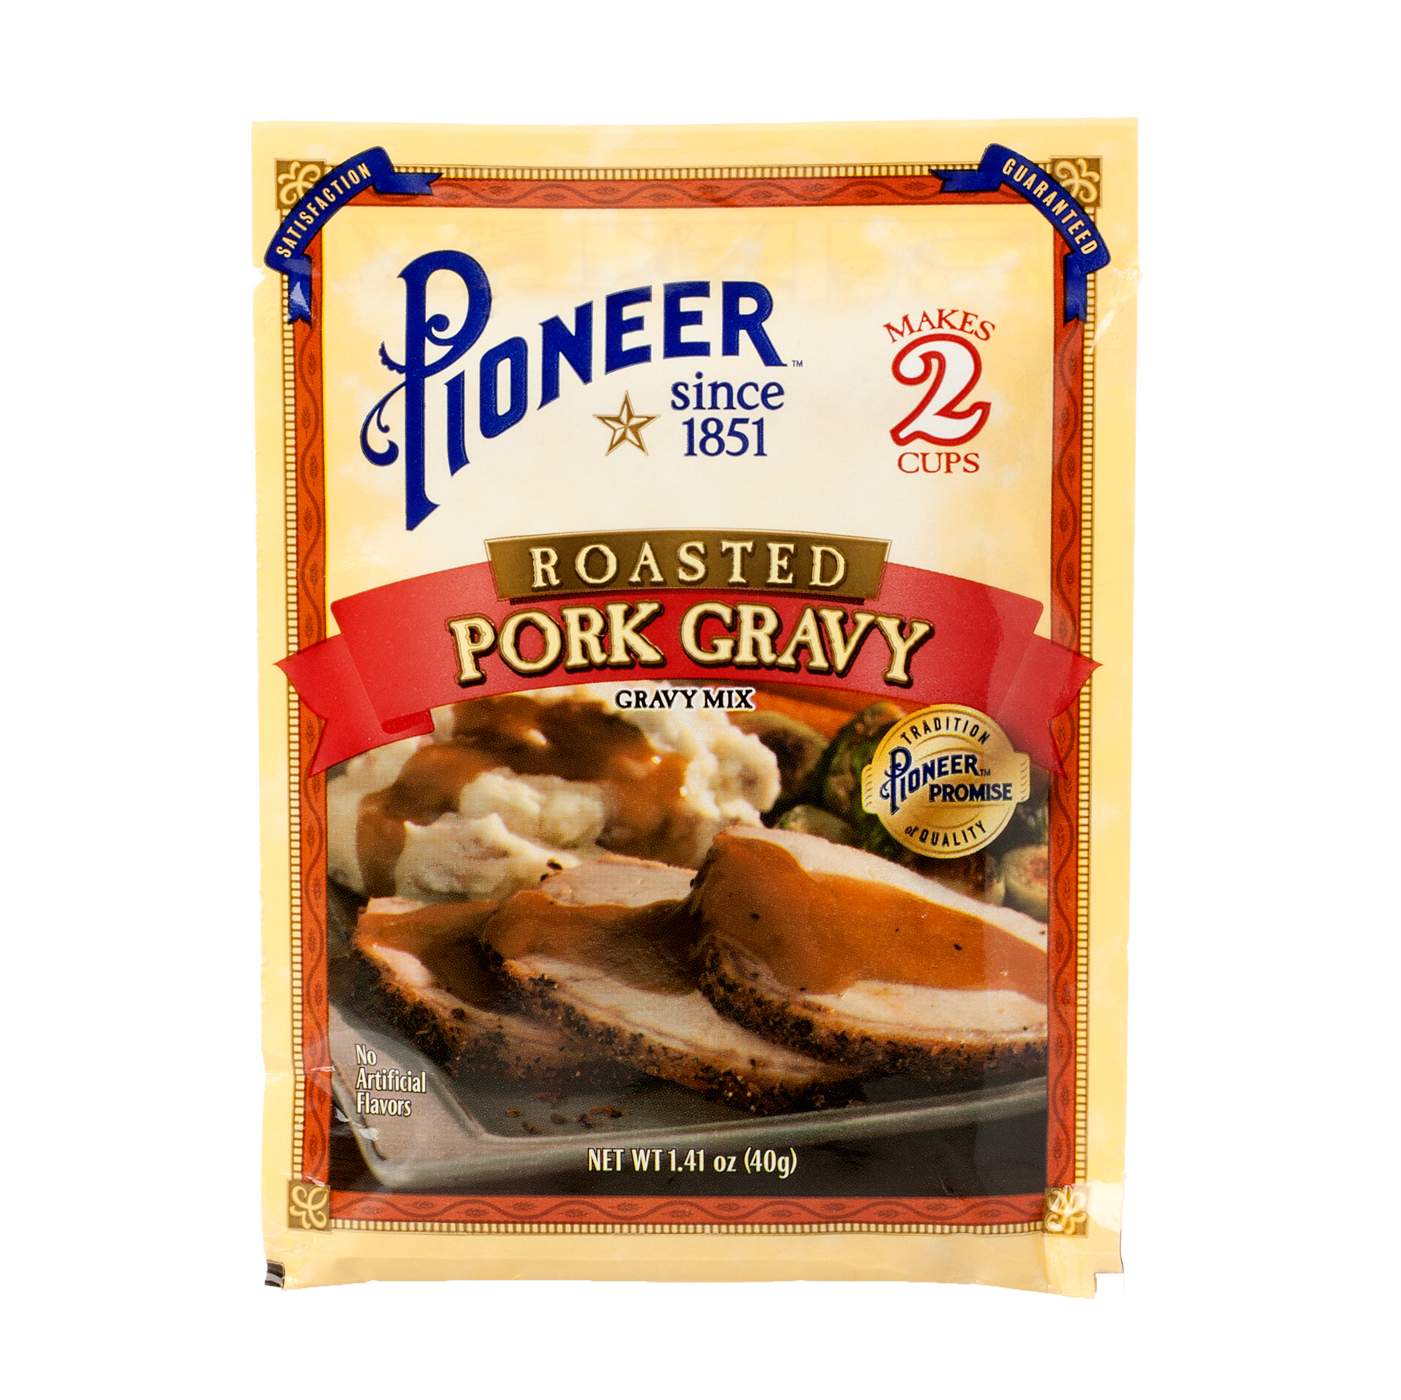 Pioneer Brand Roasted Pork Gravy Mix; image 1 of 2